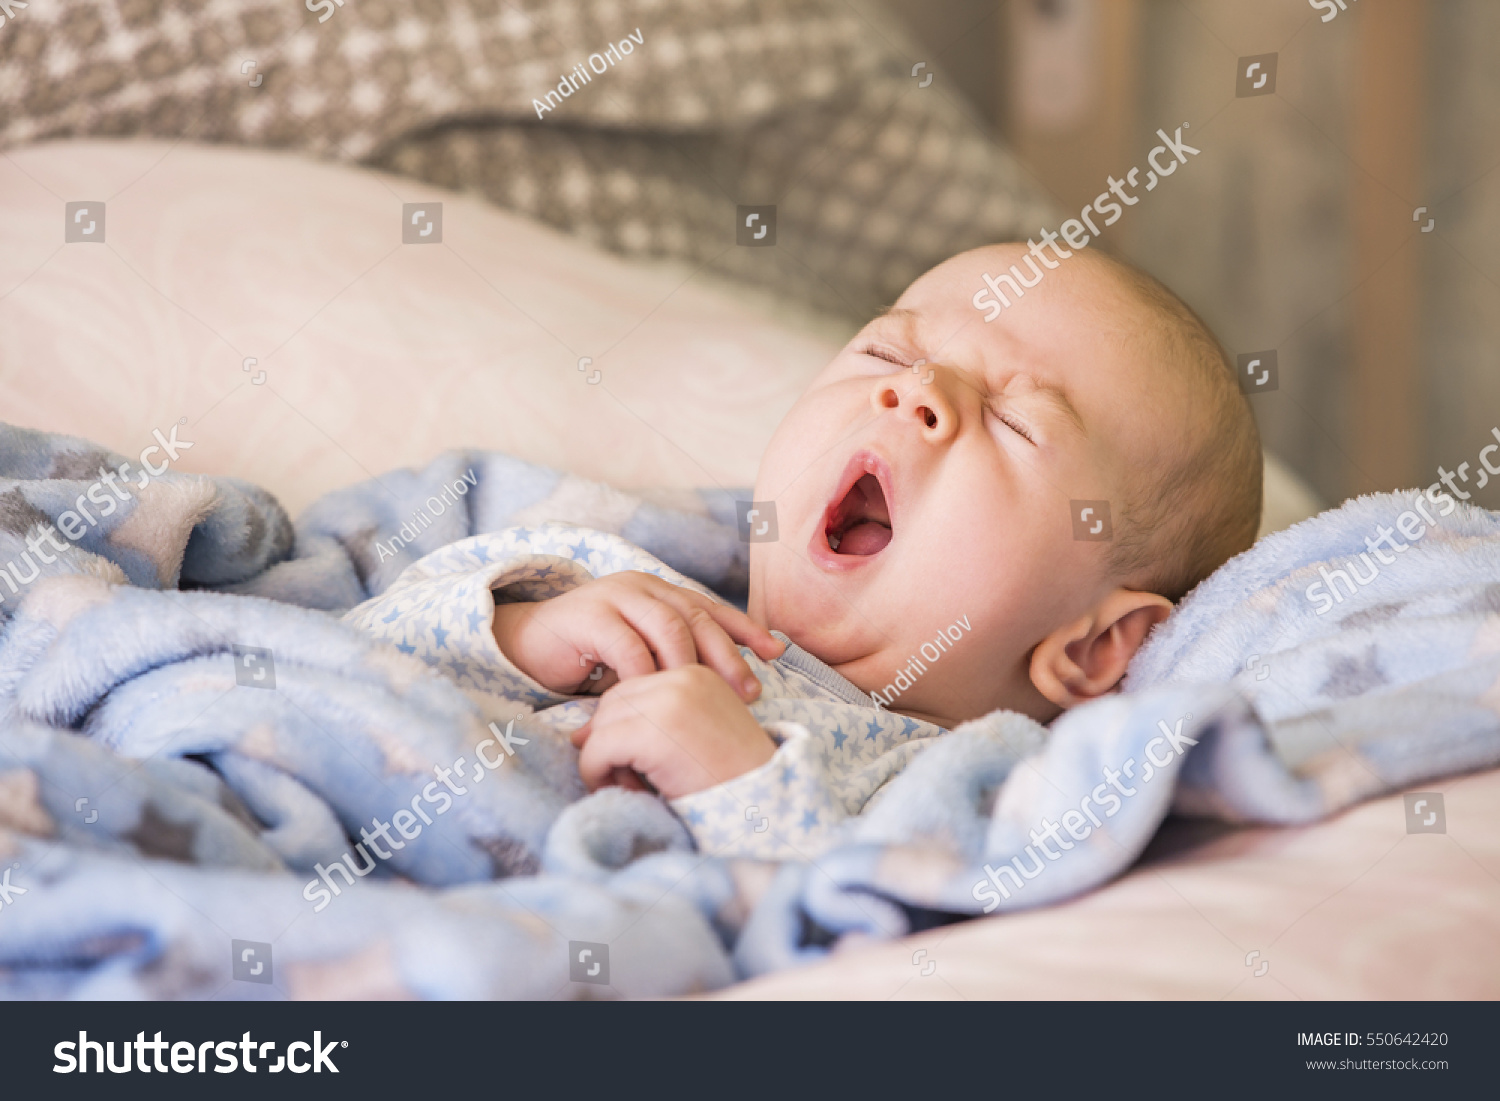 Cute baby yawning before sleep #550642420